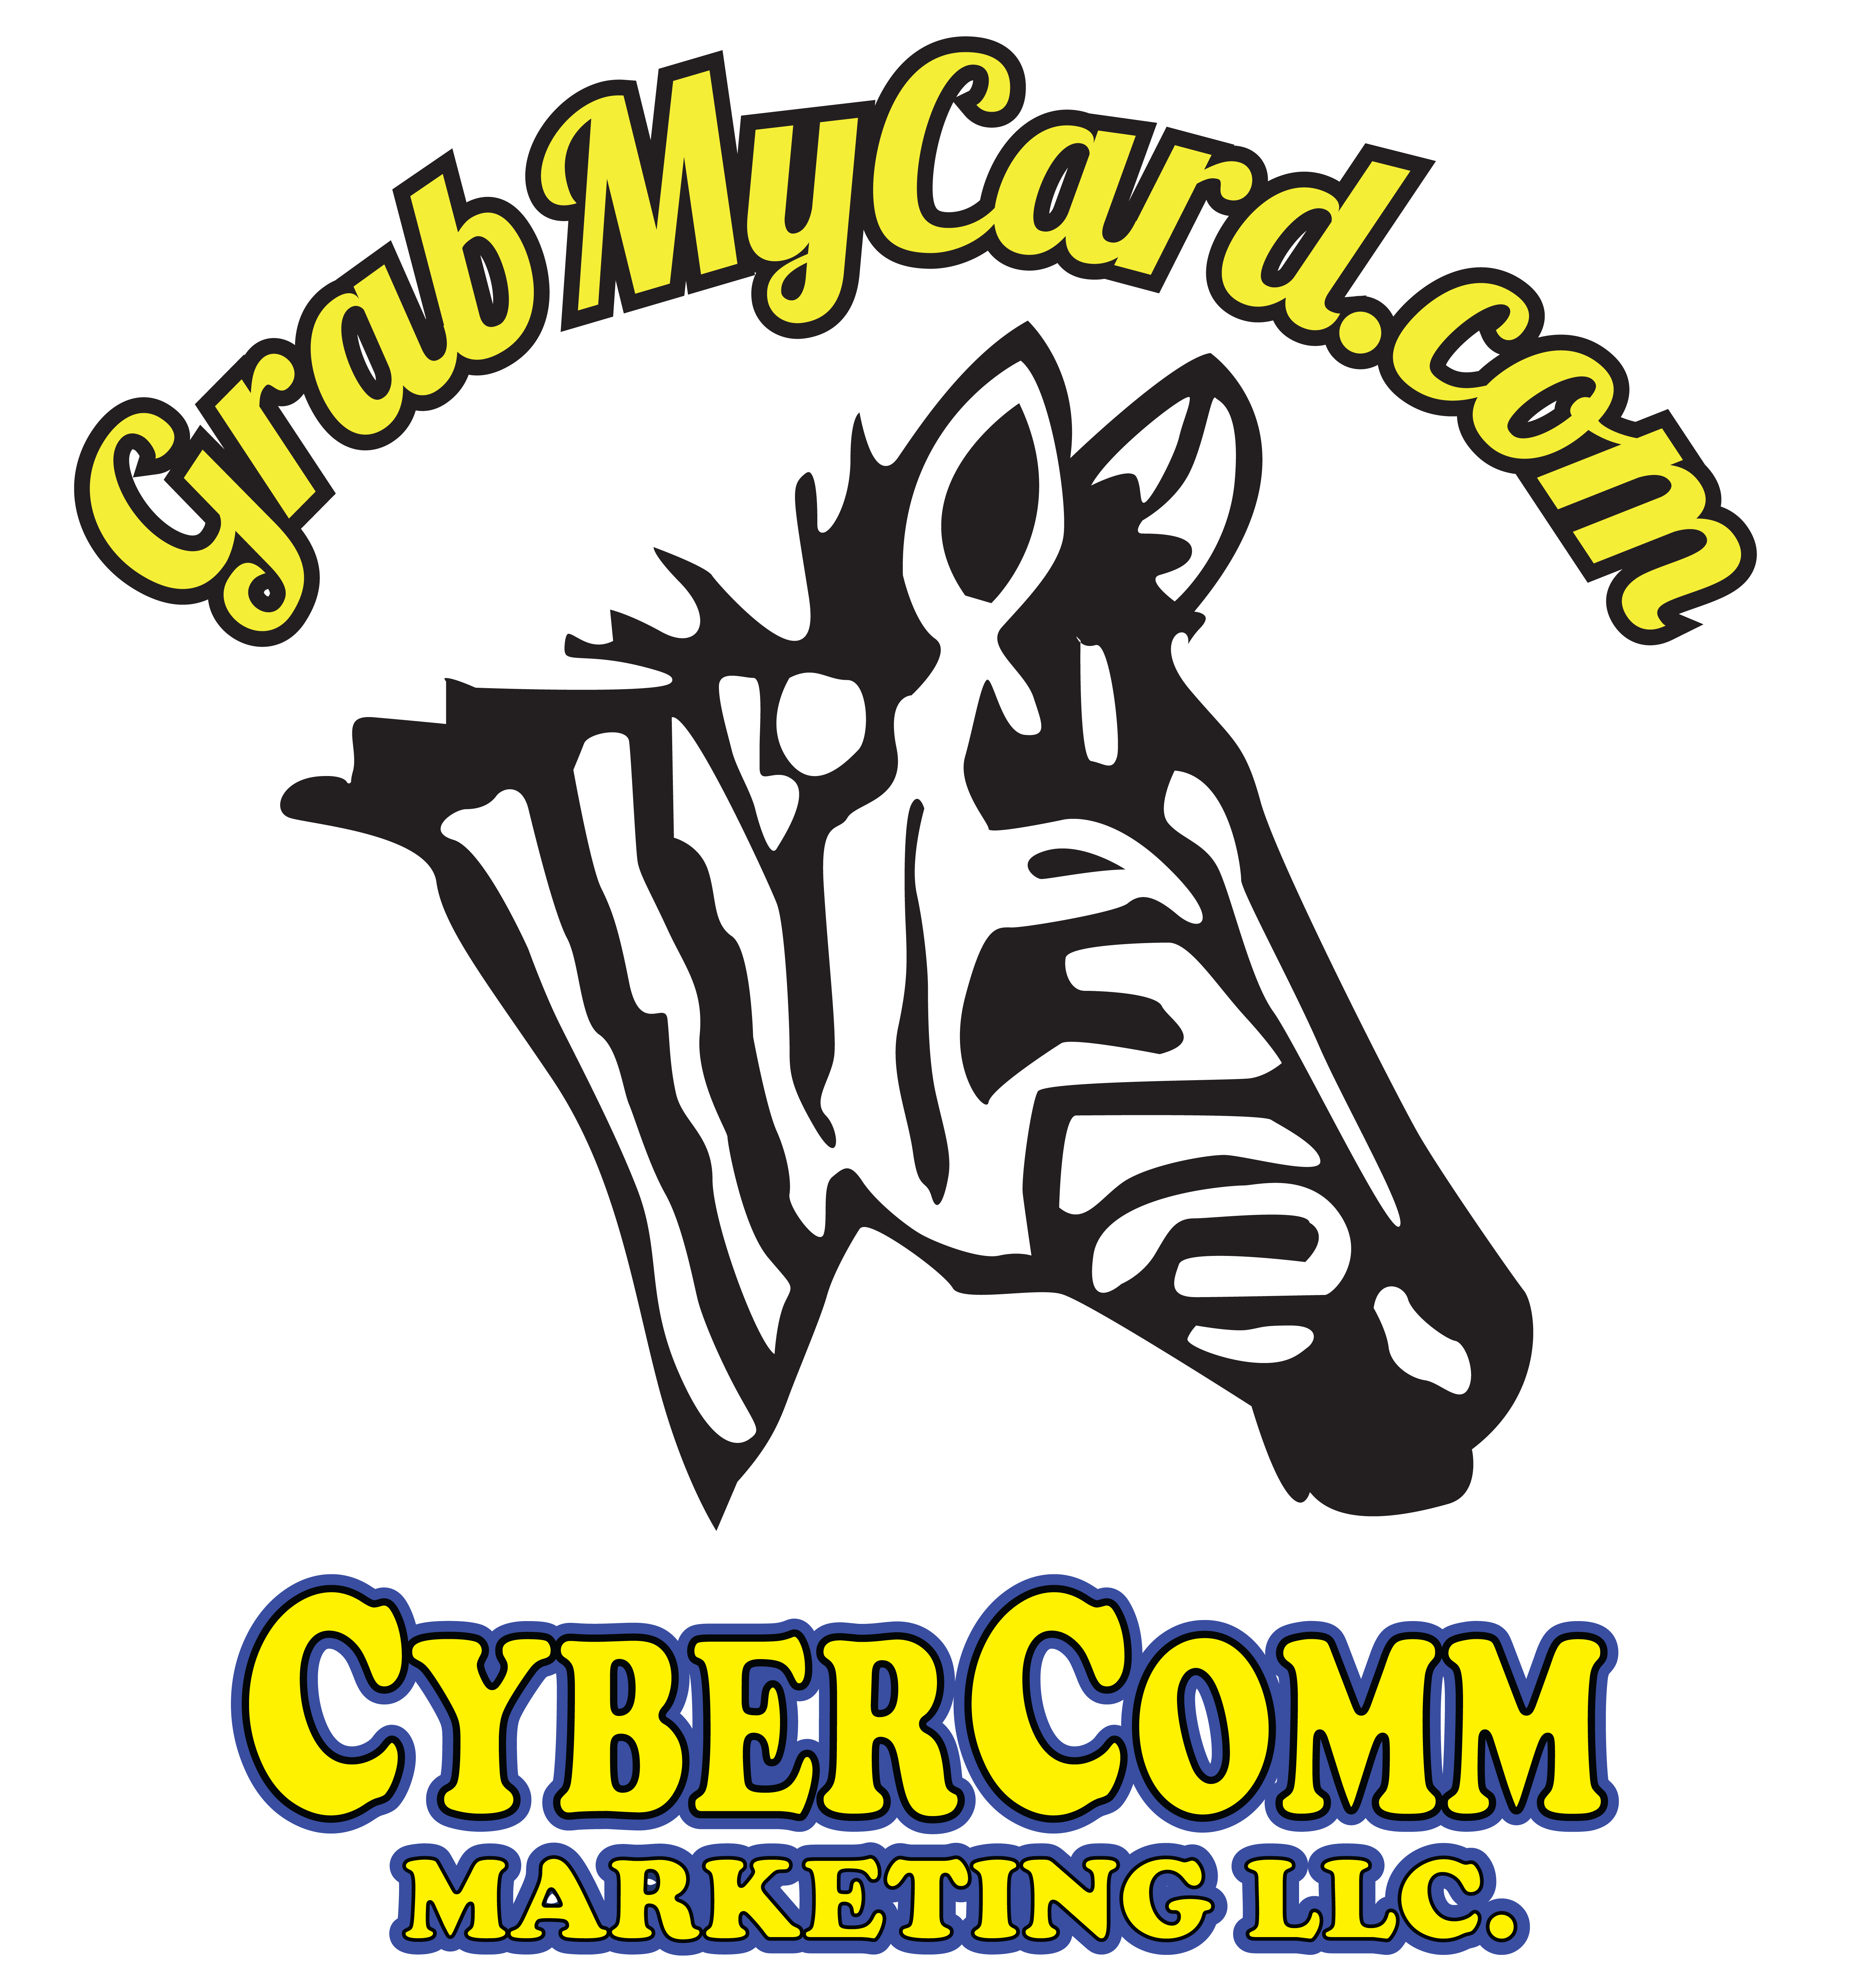 The digital business card for food trucks from GrabMyCard.com & CyberComm Marketing, LLC